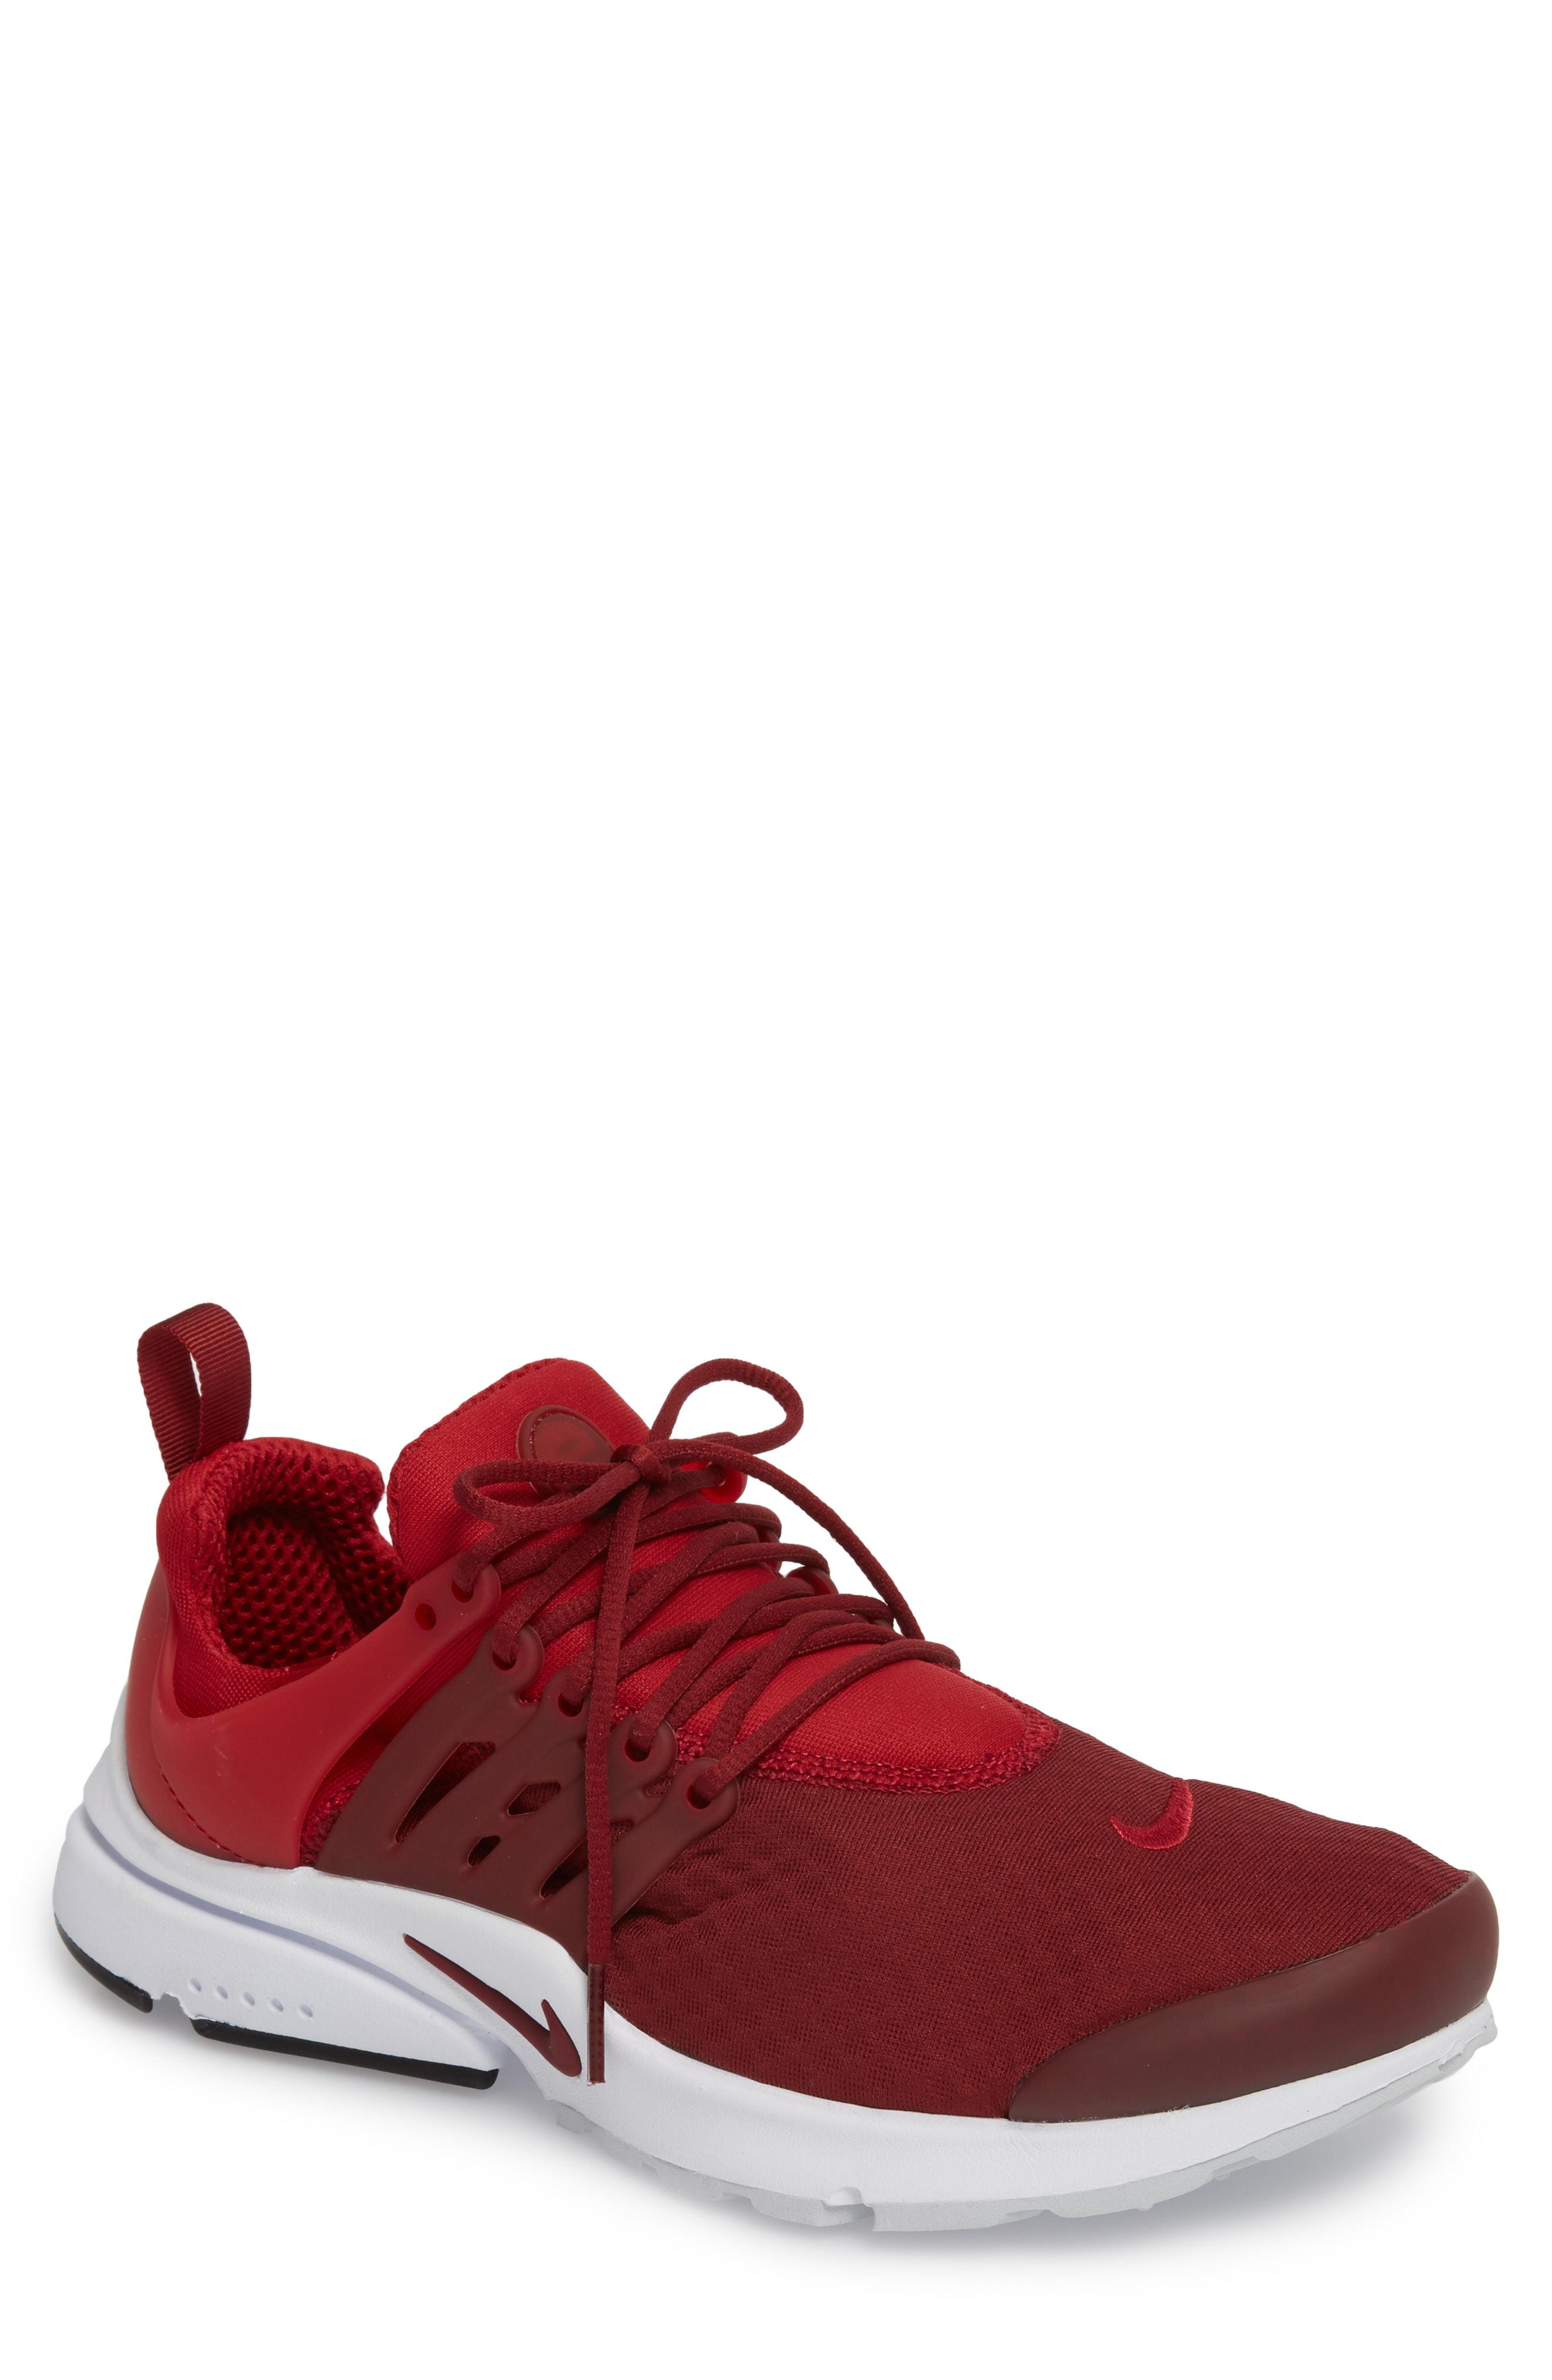 Nike Air Presto Essential Sneaker In Gym Red/ Team Red/ Black | ModeSens